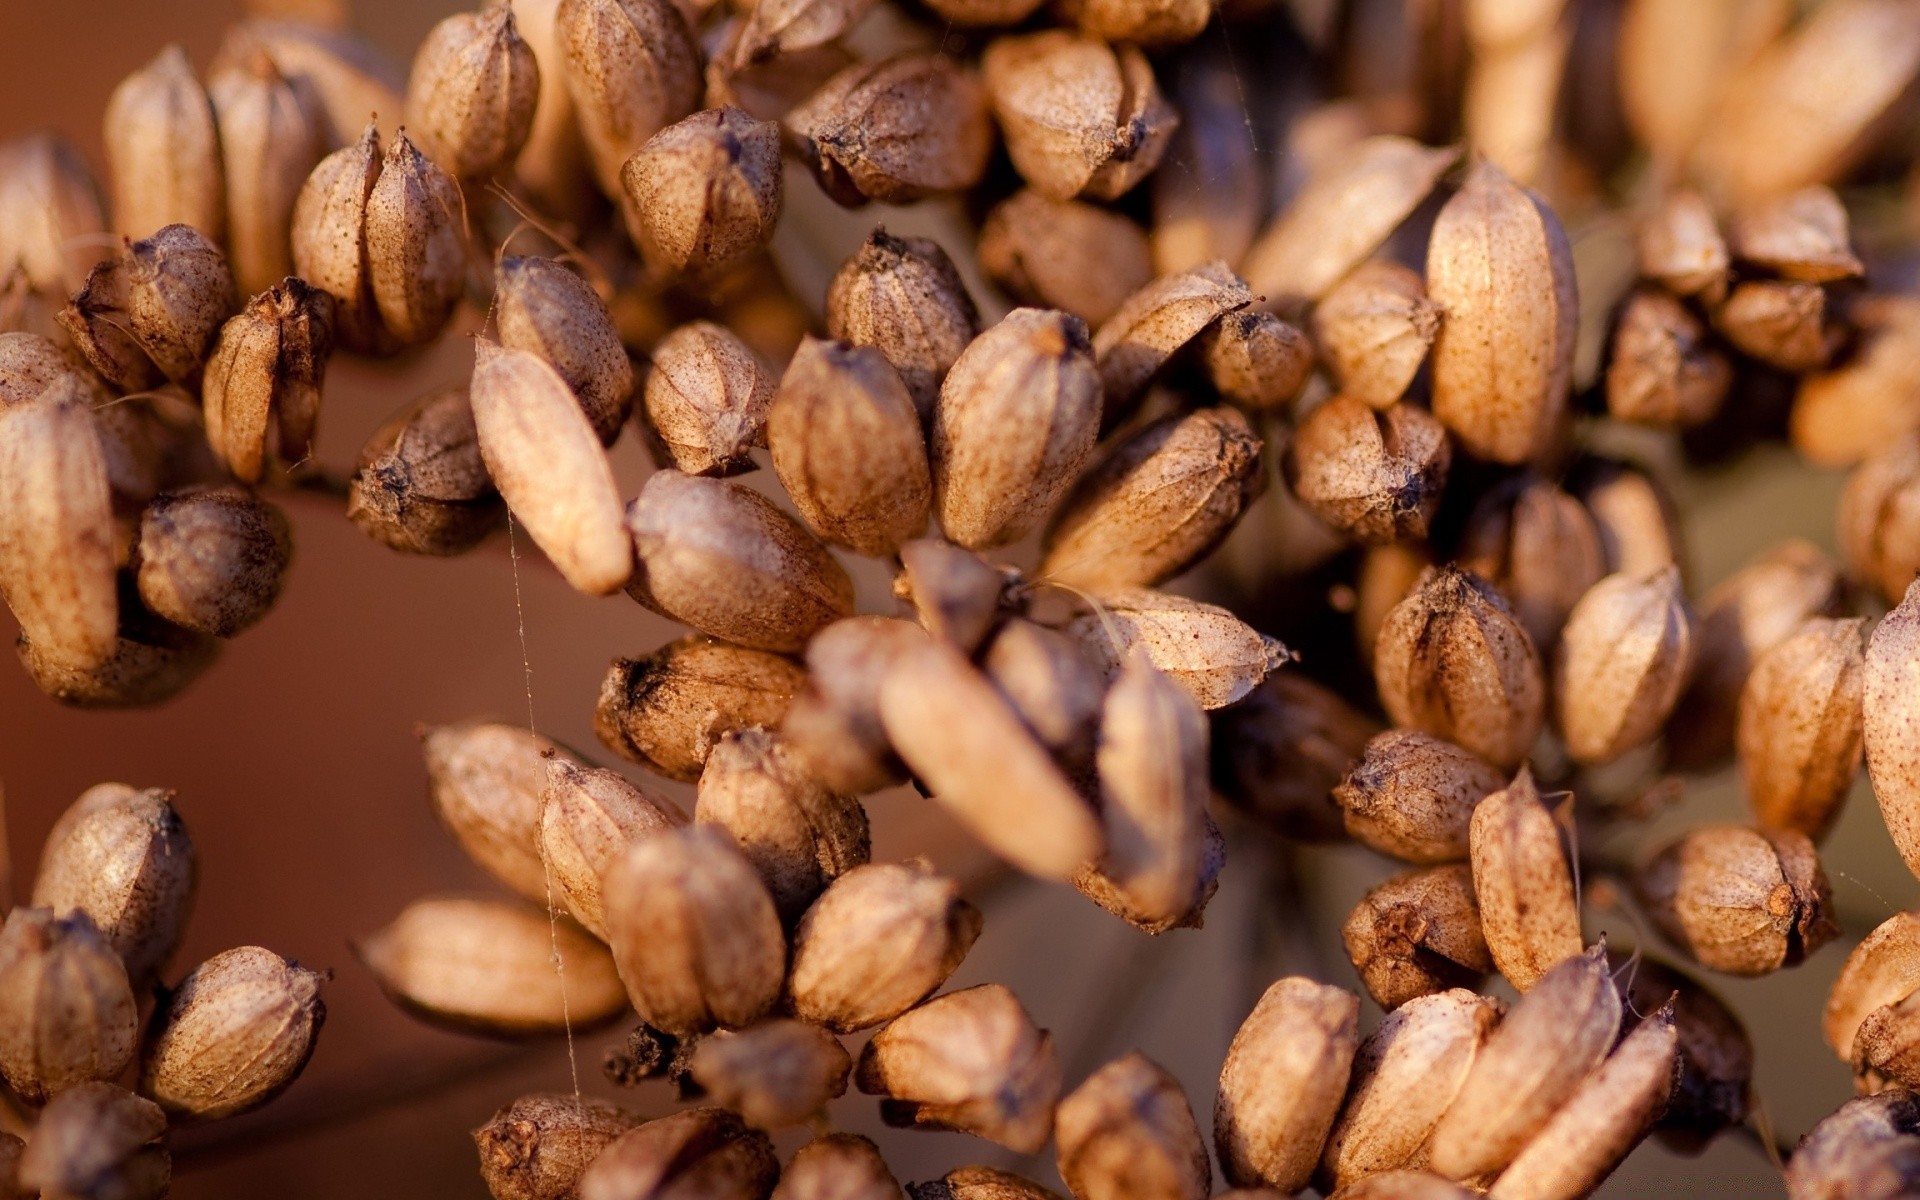 flowers seed nutrition food dry ingredients health whole batch nut taste meat coffee